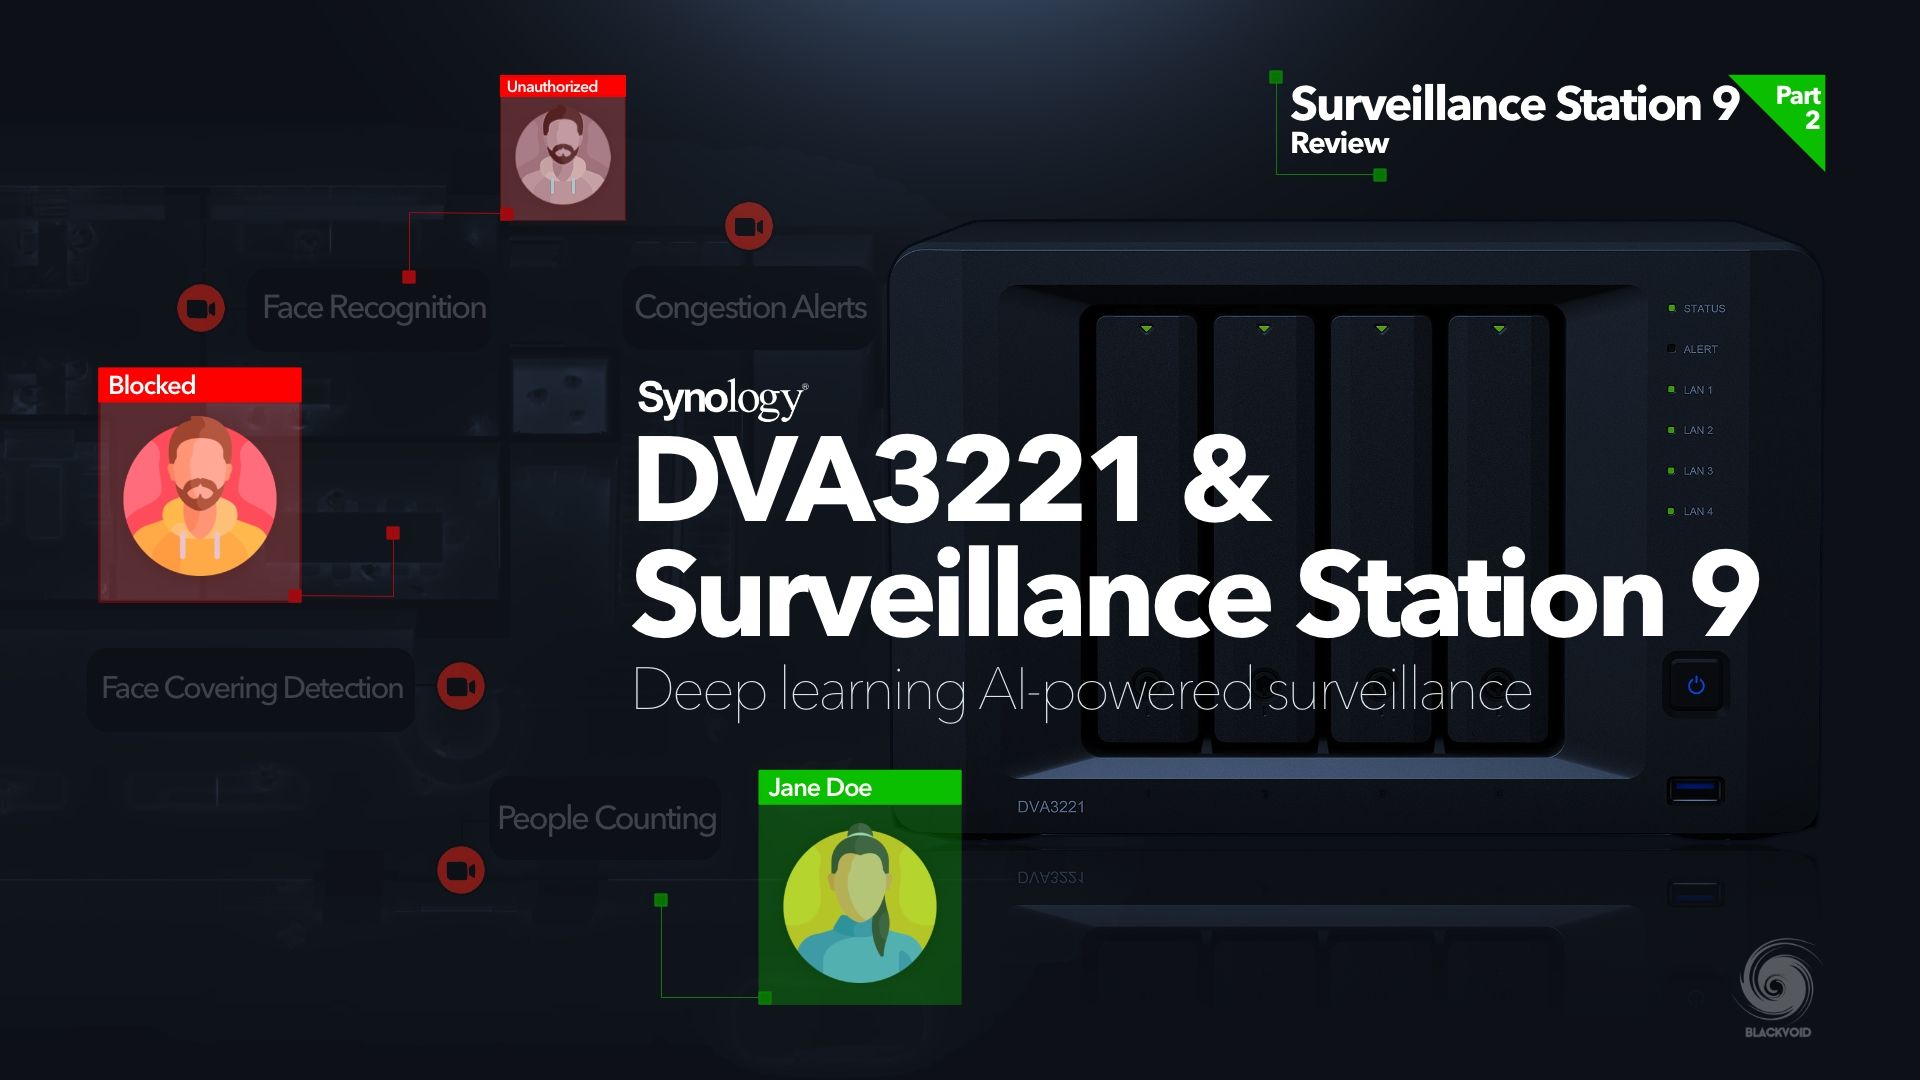 Synology DVA3221 & Surveillance Station 9 Review - Part 2